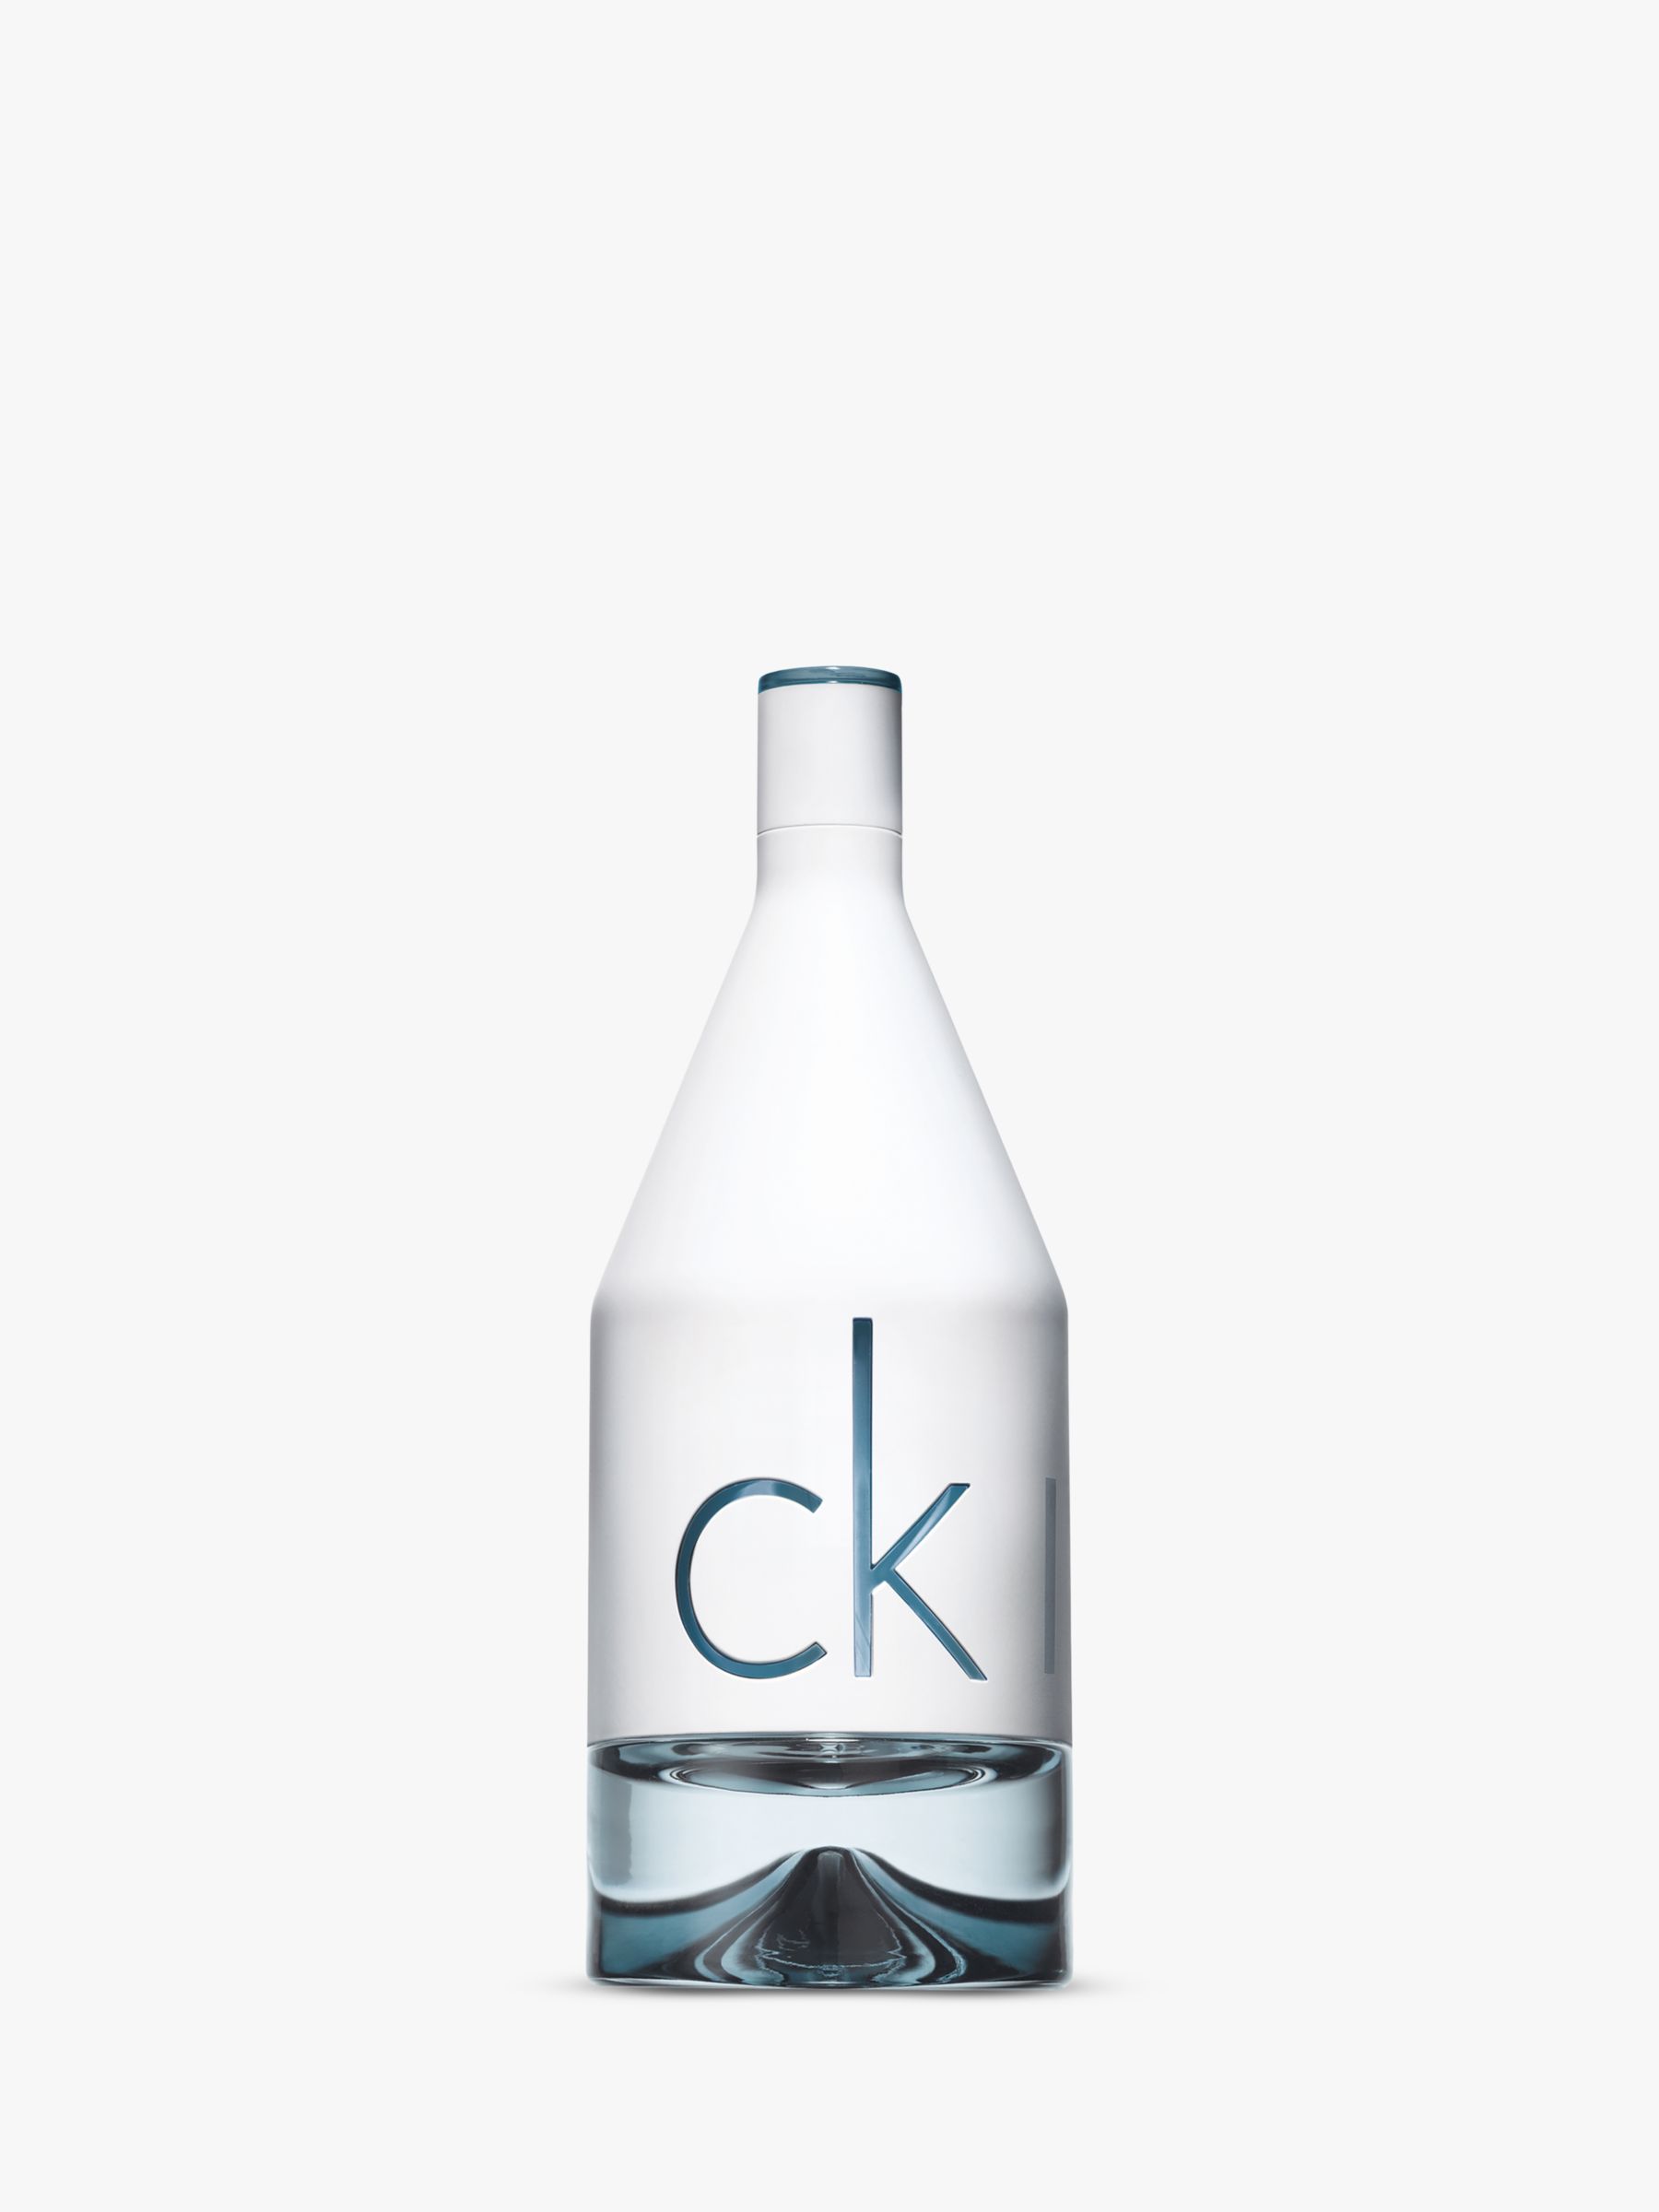 Calvin Klein CK In2U Her Eau De Toilette 150ml - Perfume Clearance Centre